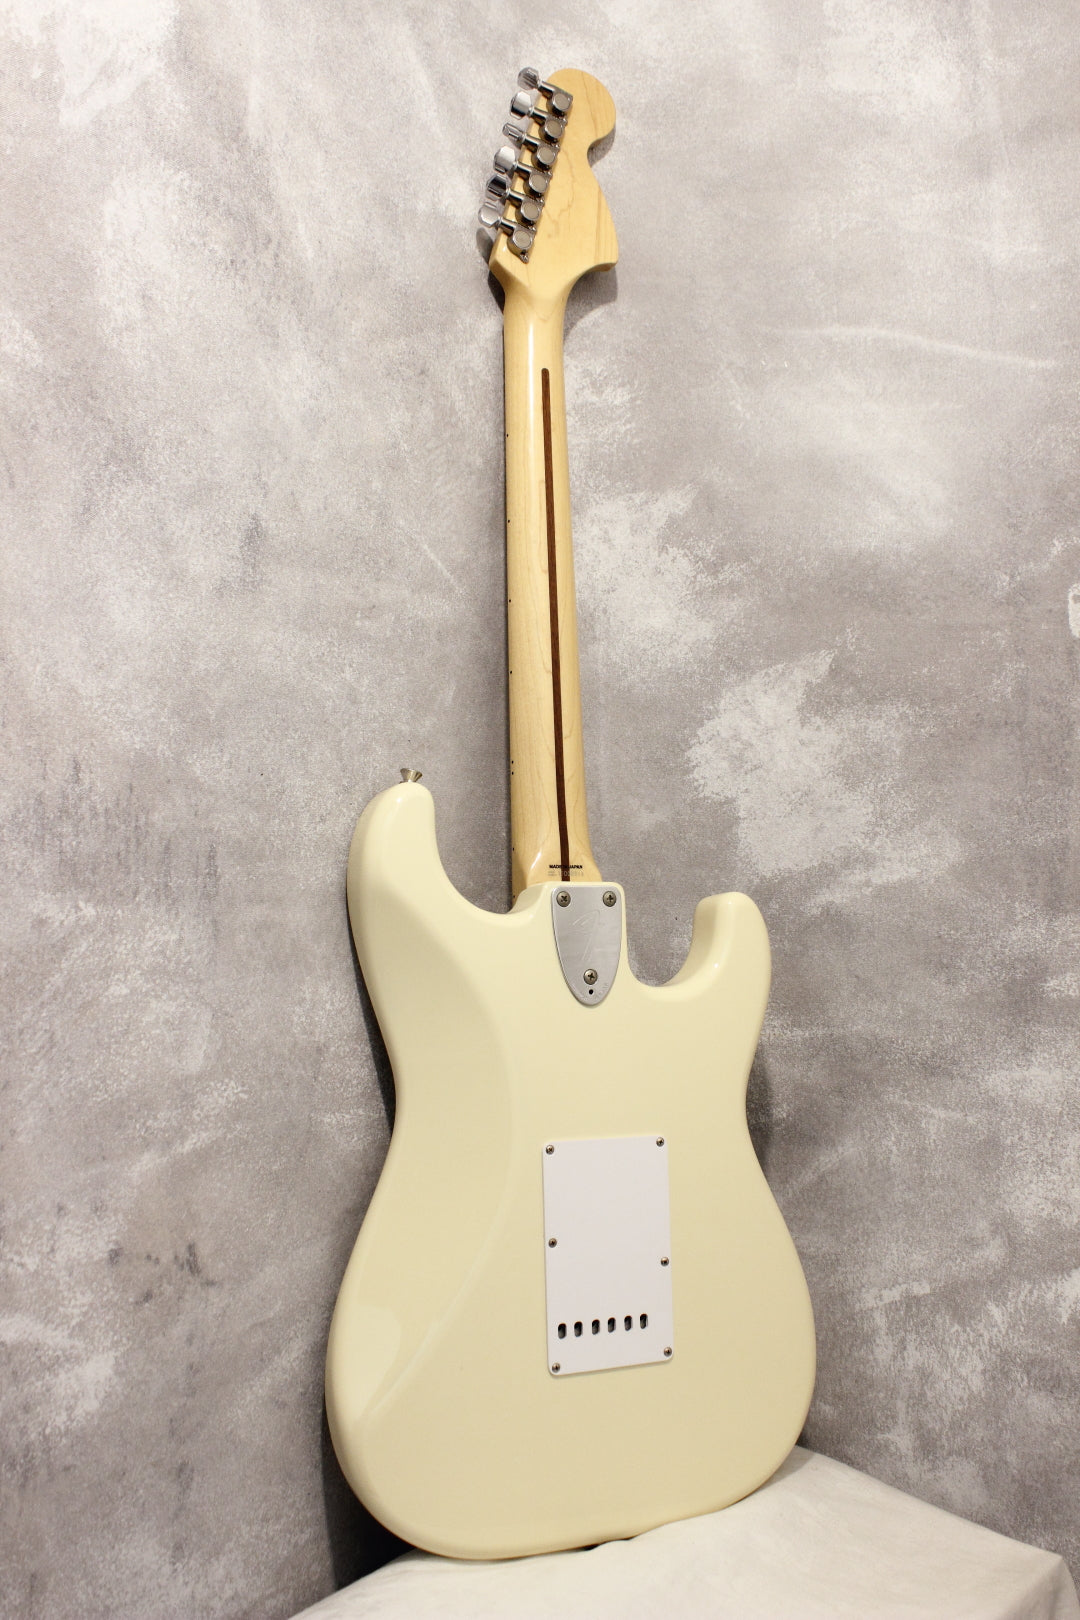 Fender Japan Left Handed '72 Stratocaster ST72/LH Vintage White 2010